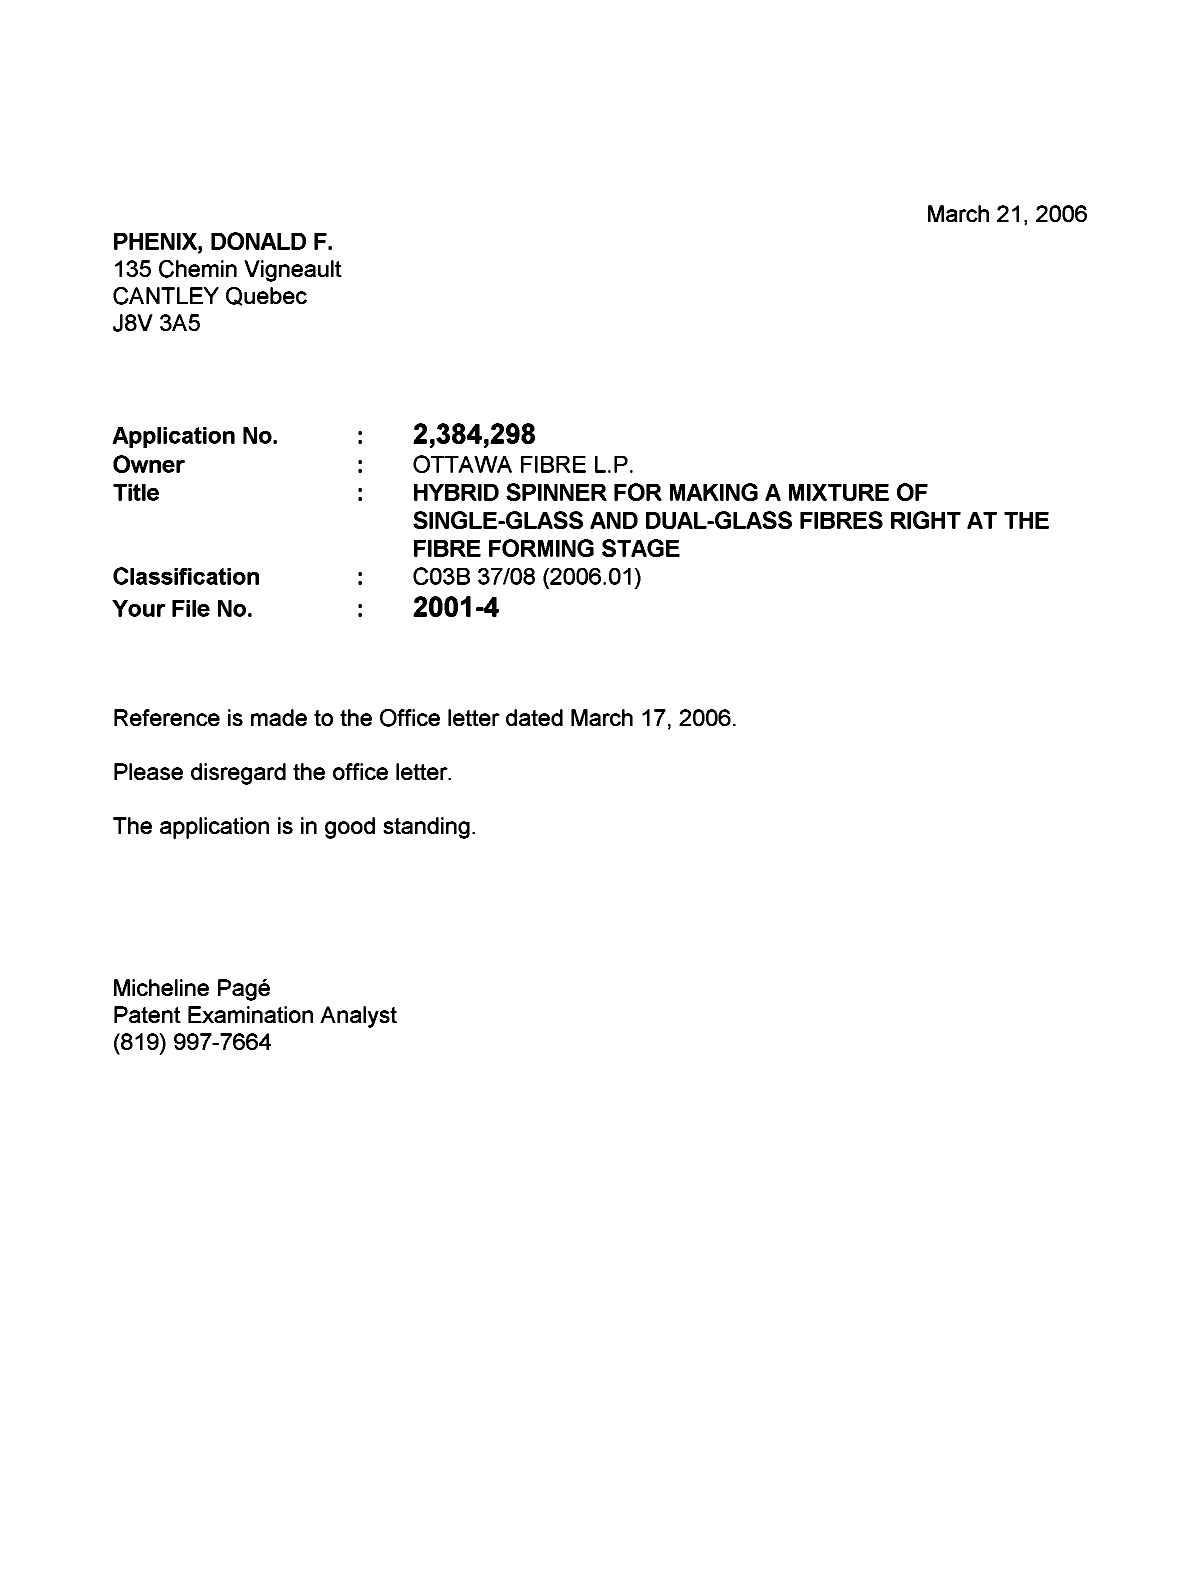 Canadian Patent Document 2384298. Correspondence 20060321. Image 1 of 1